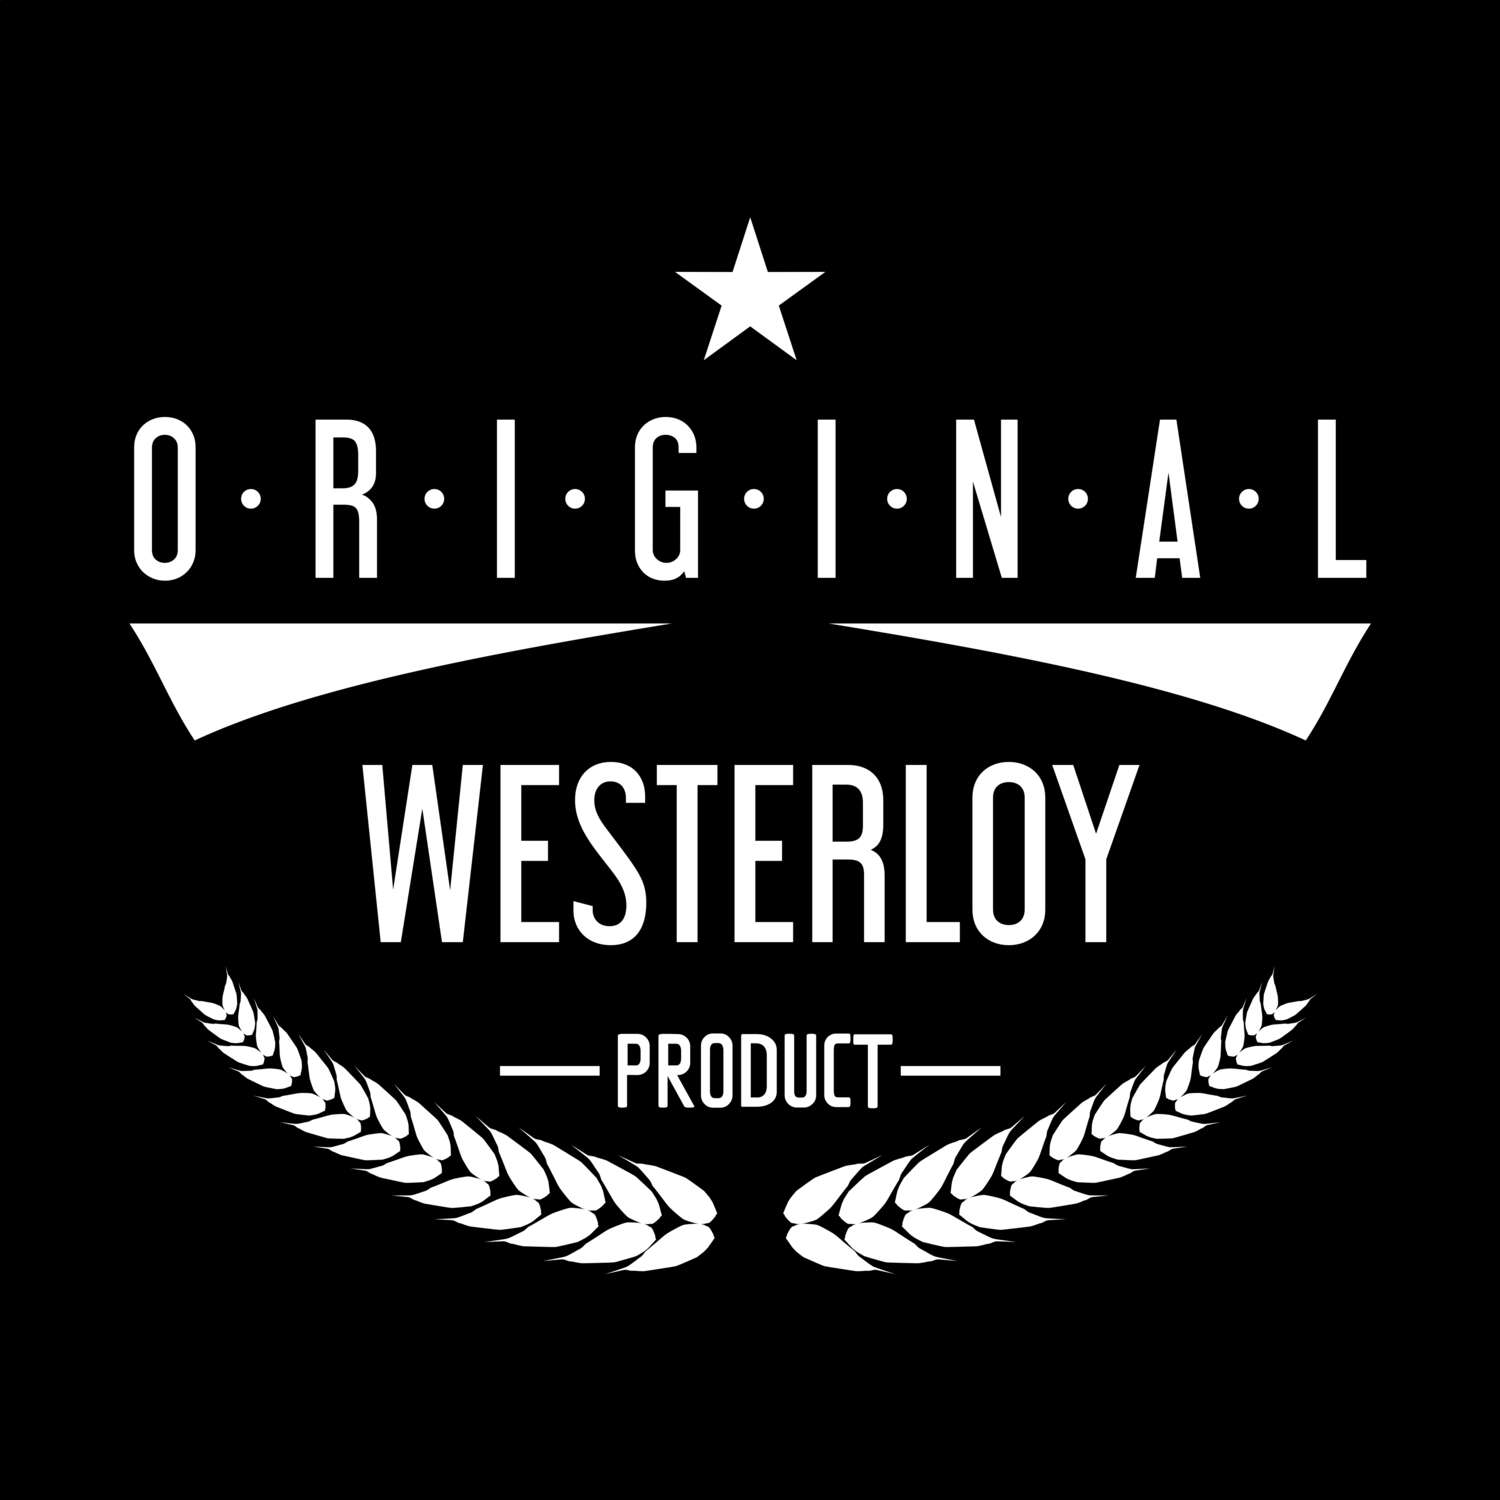 Westerloy T-Shirt »Original Product«